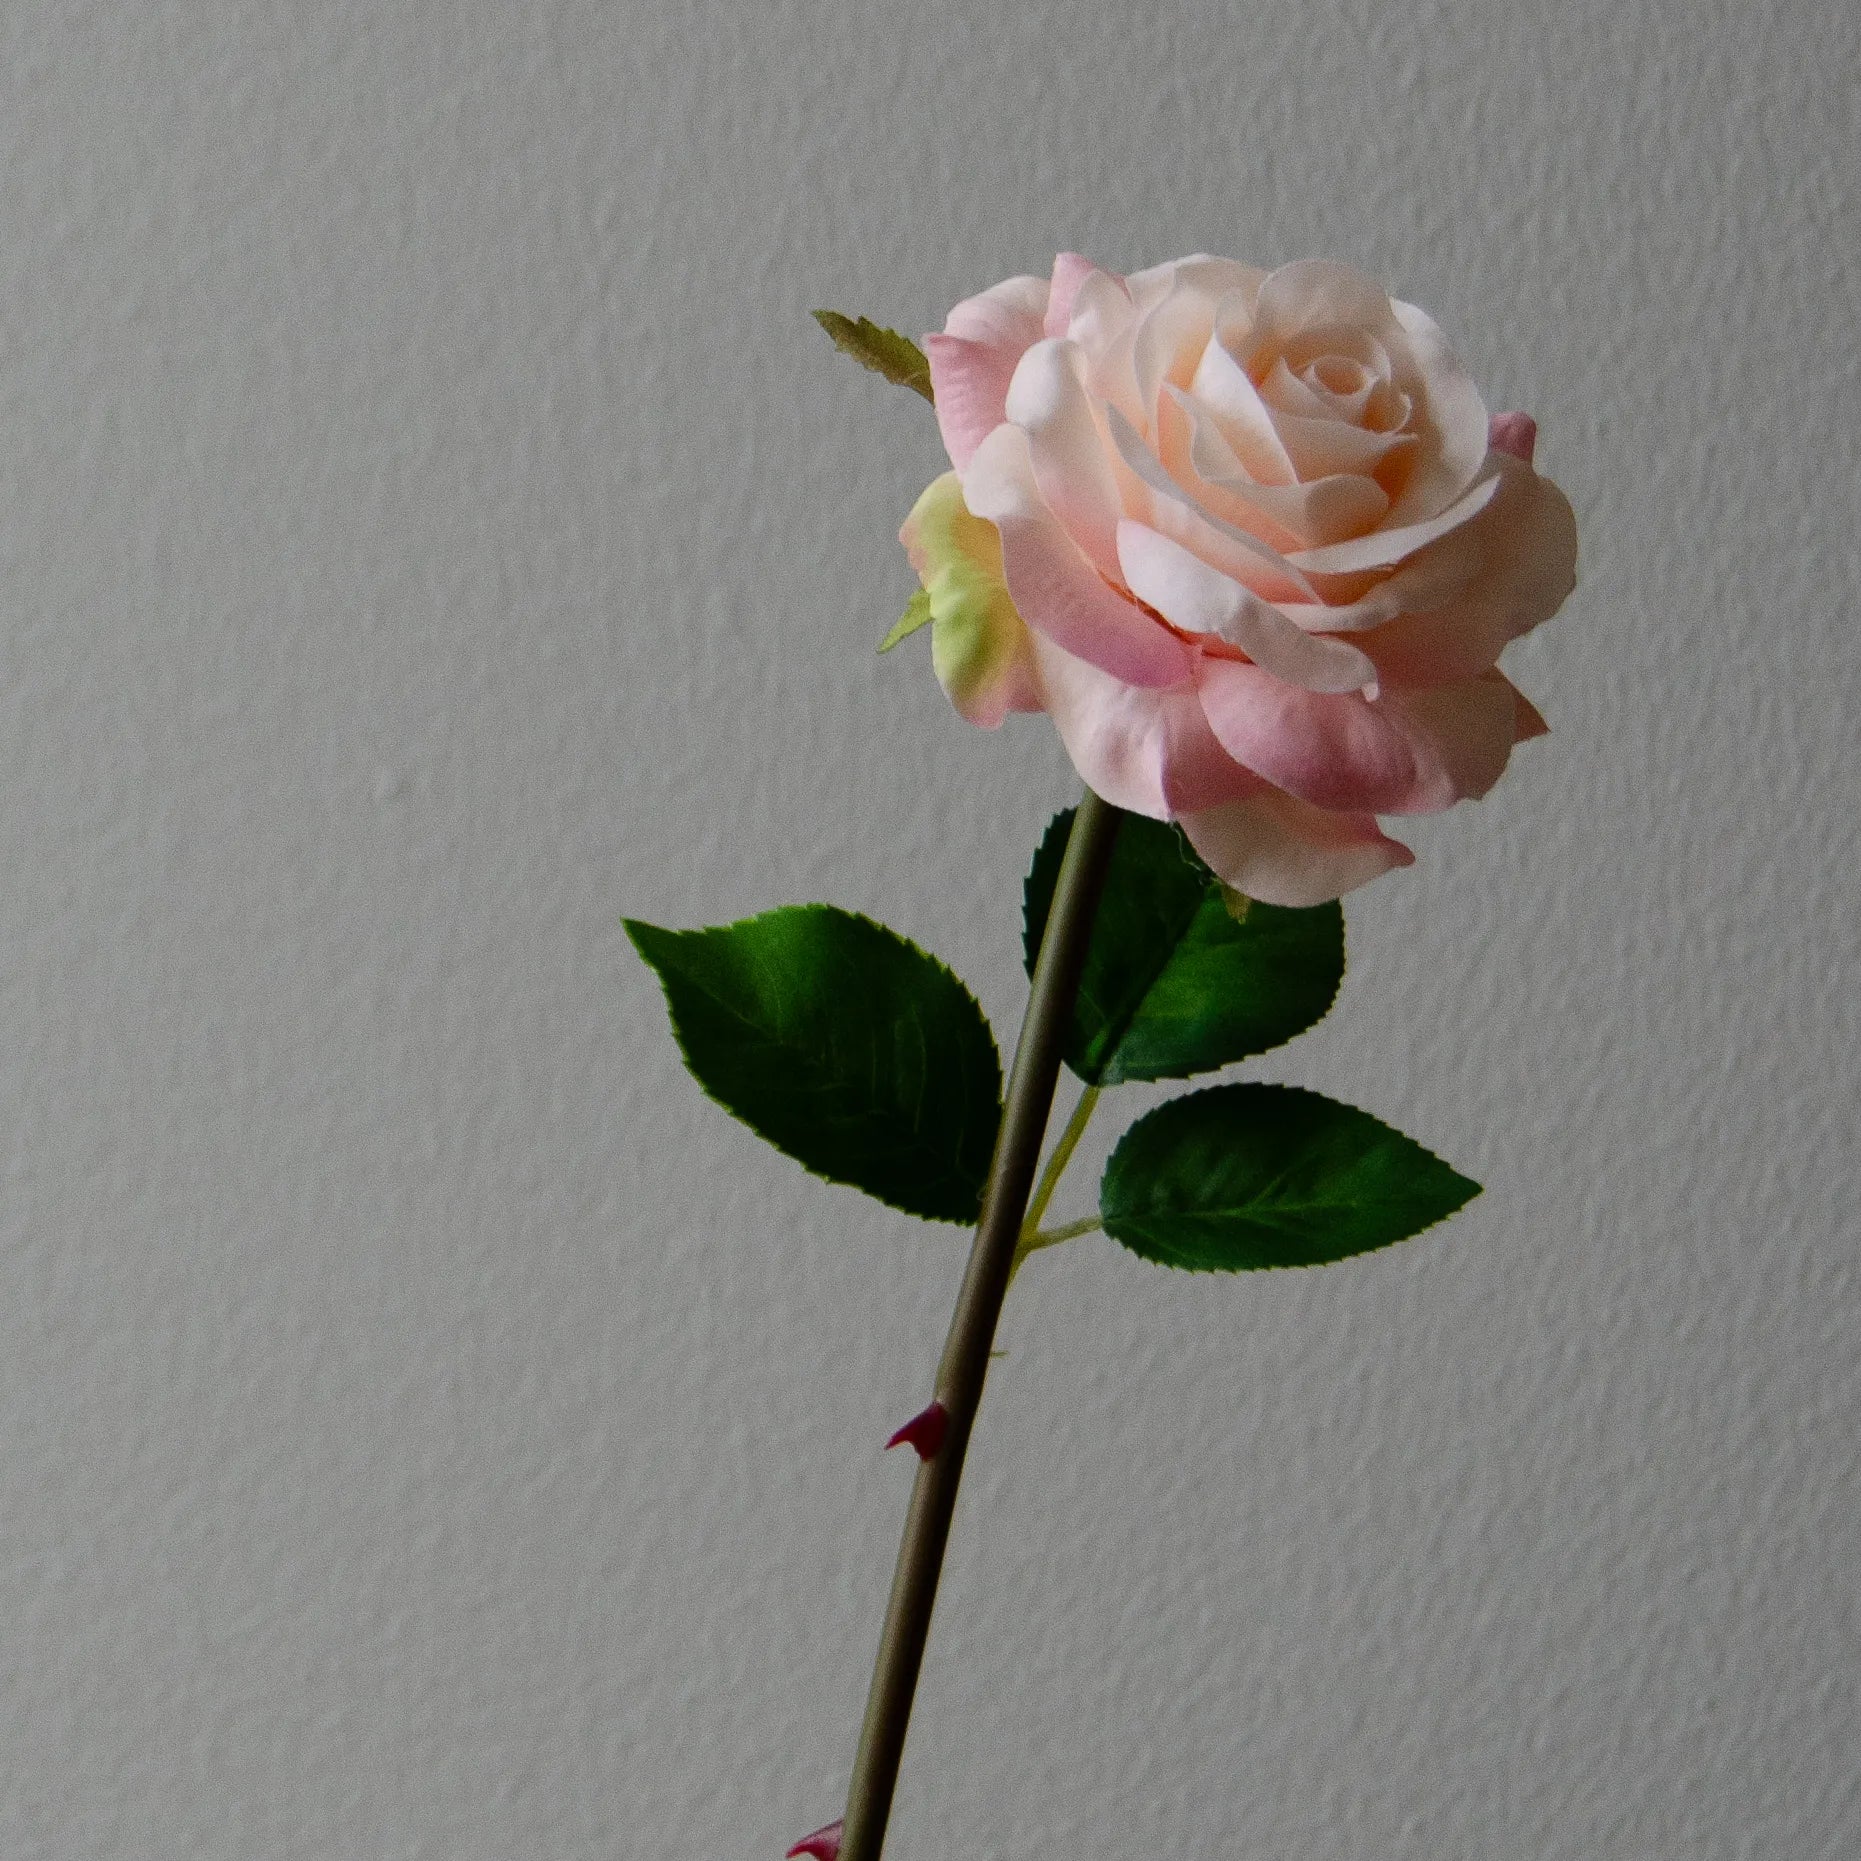 Artificial Medium Stem Garden Rose from Botané